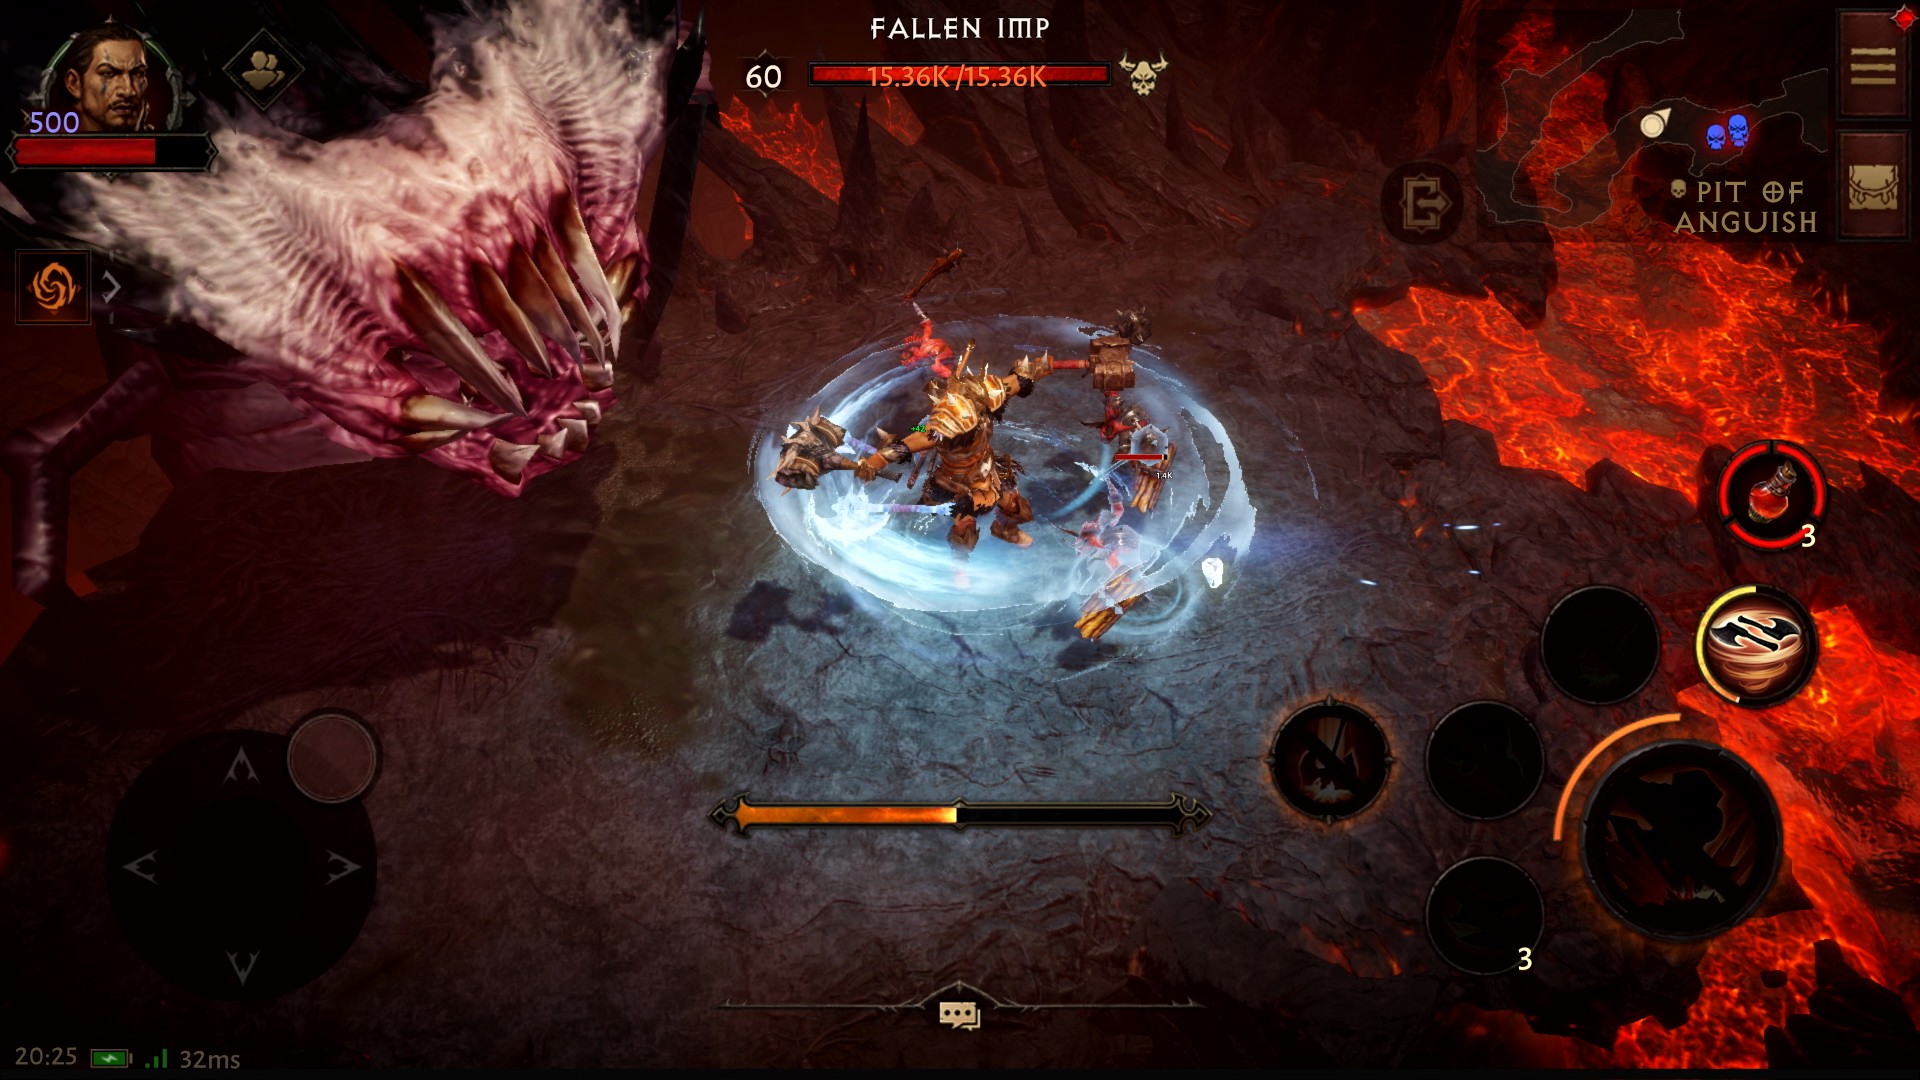 Neither Activision nor Blizzard needed to make Diablo Immortal